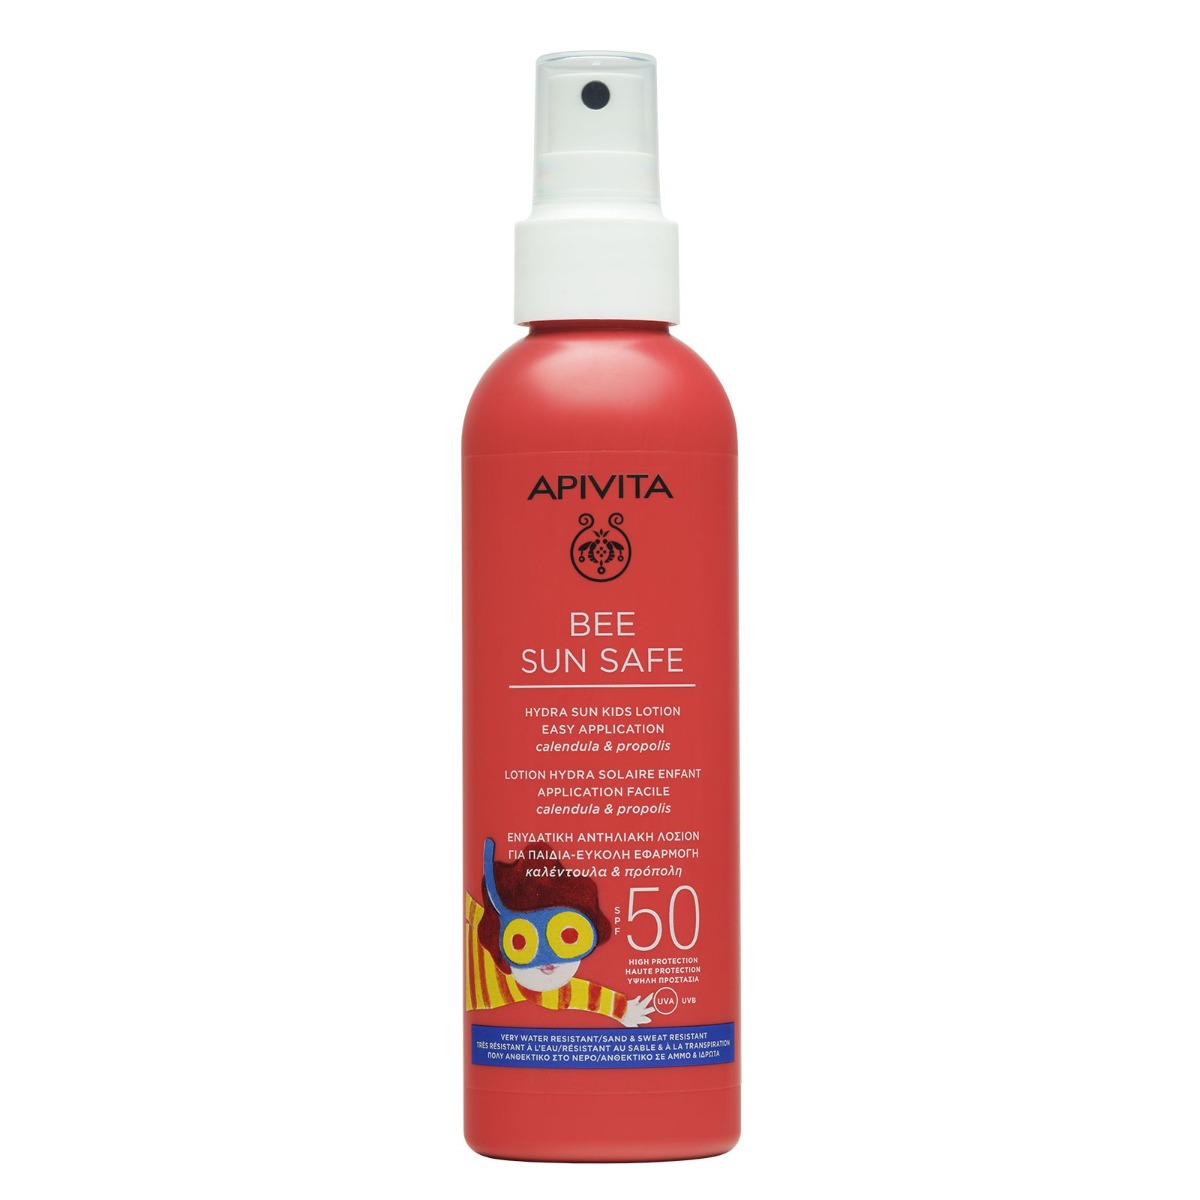 APIVITA Bee Sun Safe Hydra Sun SPF50 dětské opalovací mléko 200 ml APIVITA